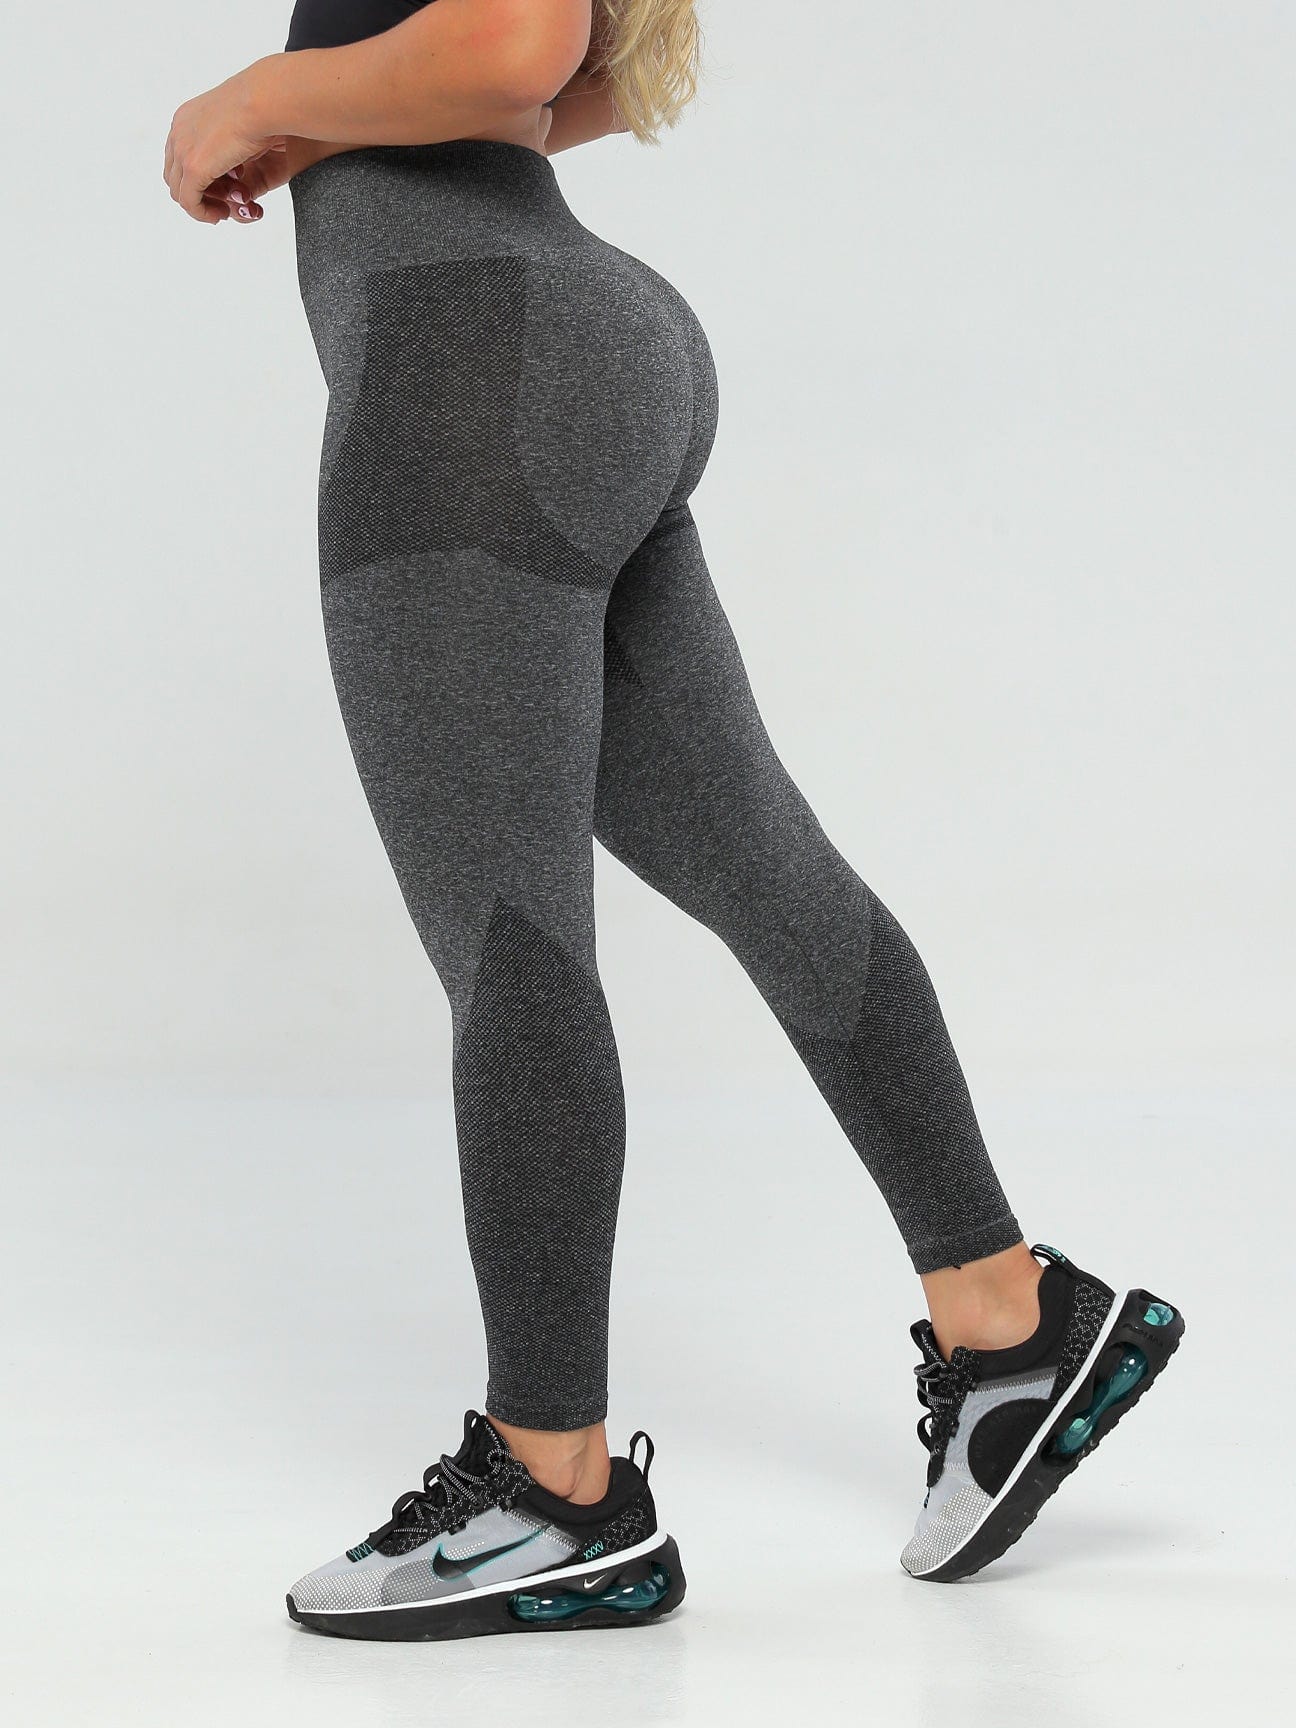 HOTChoice Seamless High Waist Sports Yoga Women Leggings 2Color Butt  Lifting S-L